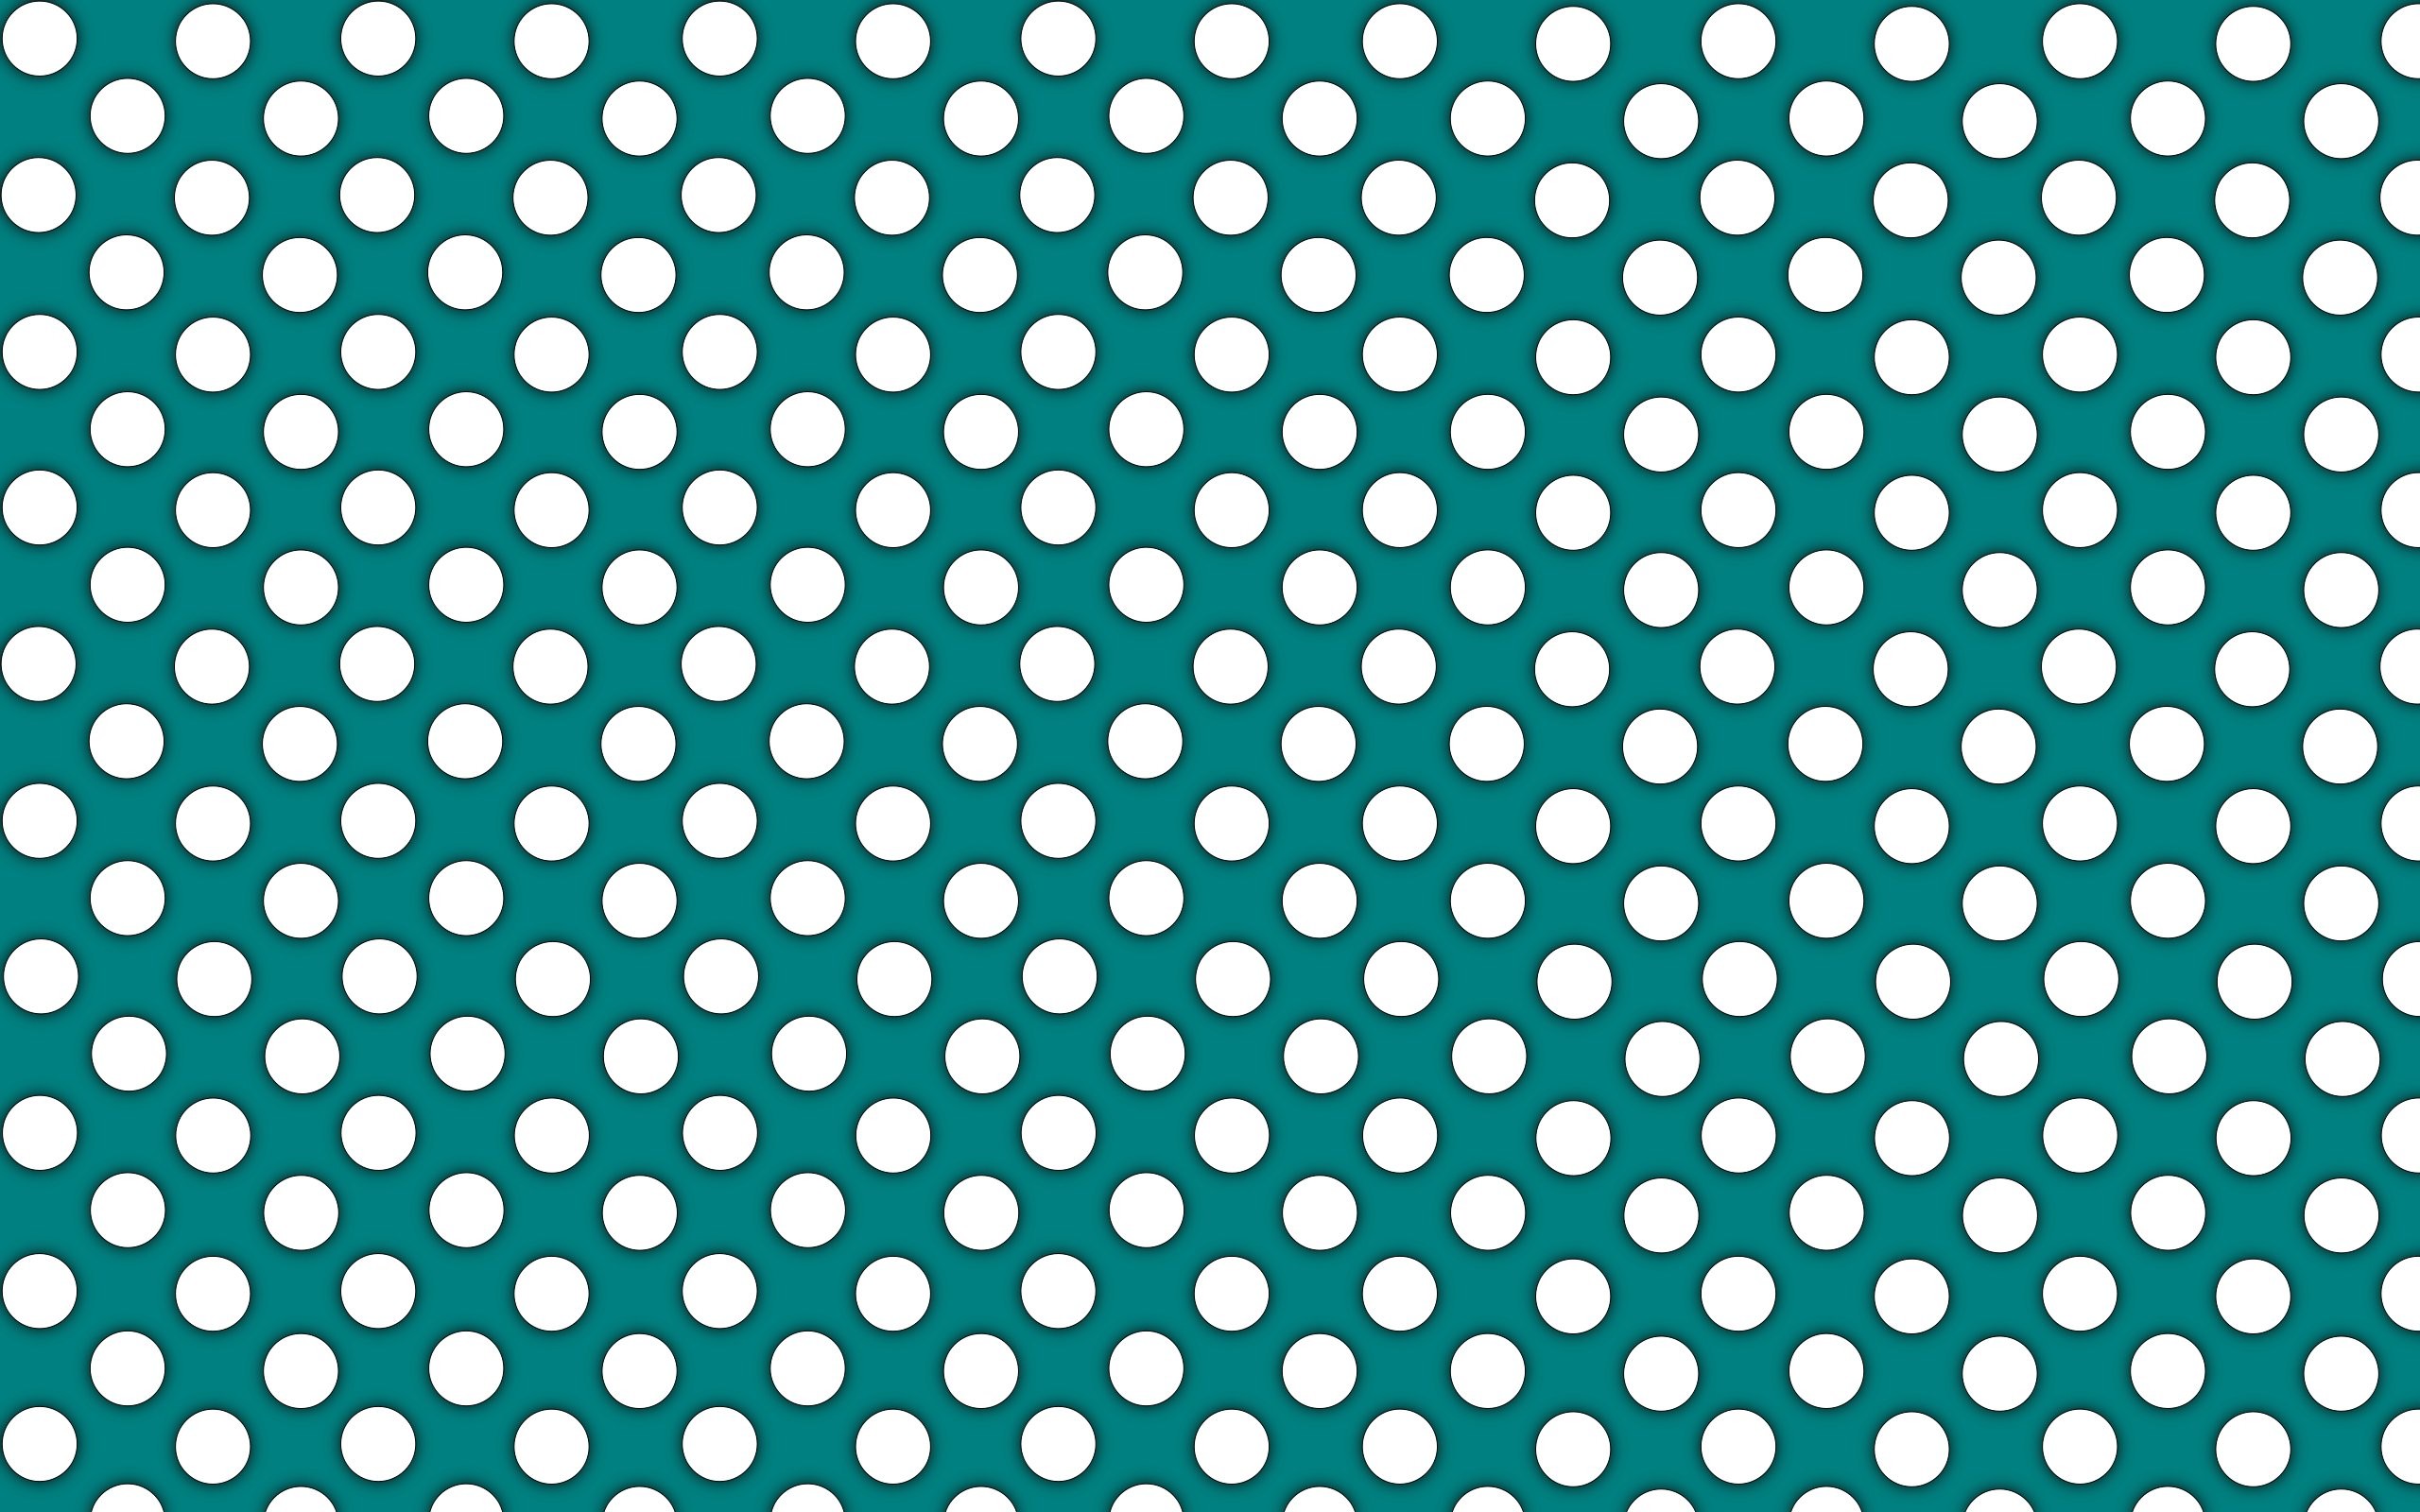 2560x1600 Black and White Polka Dot Wallpaper: .